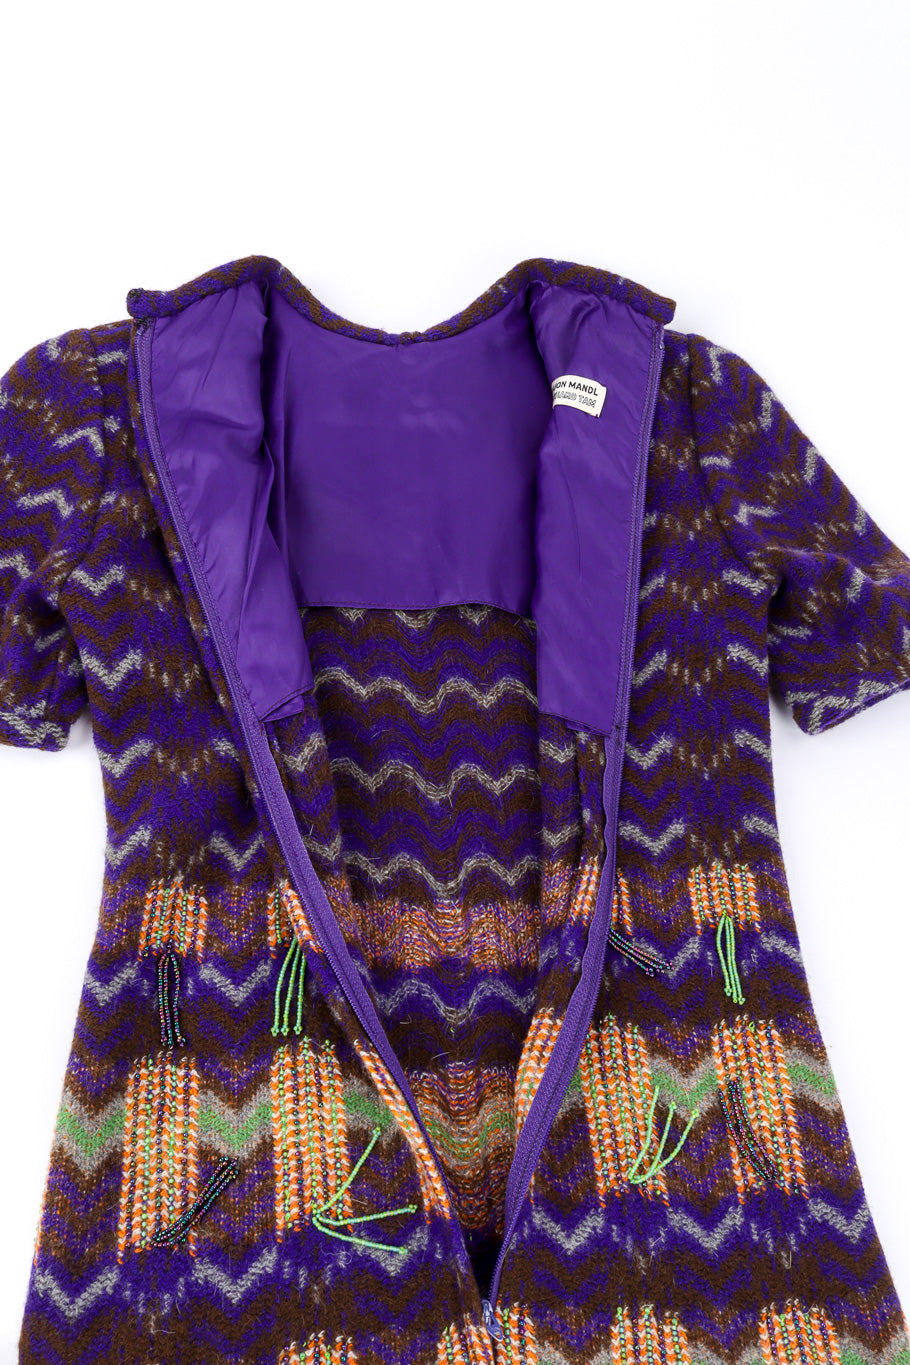 Vintage Richard Tam/Jon Mandl Chevron Knit Loop Dress back unzipped @recessla